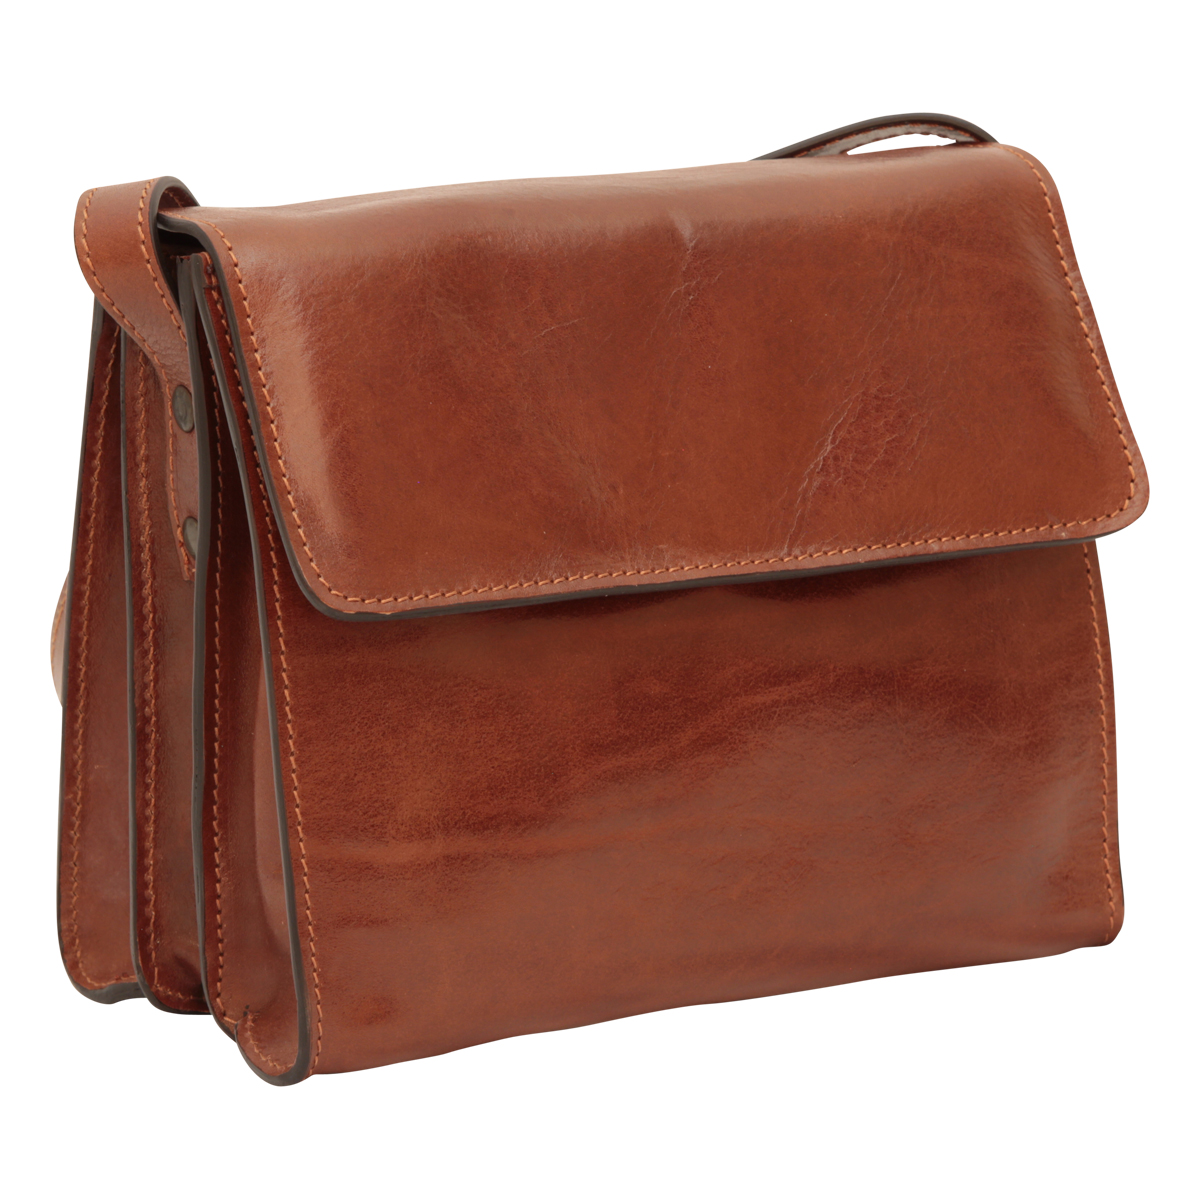 Full grain calfskin shoulder bag  | 209305MA UK | Old Angler Firenze